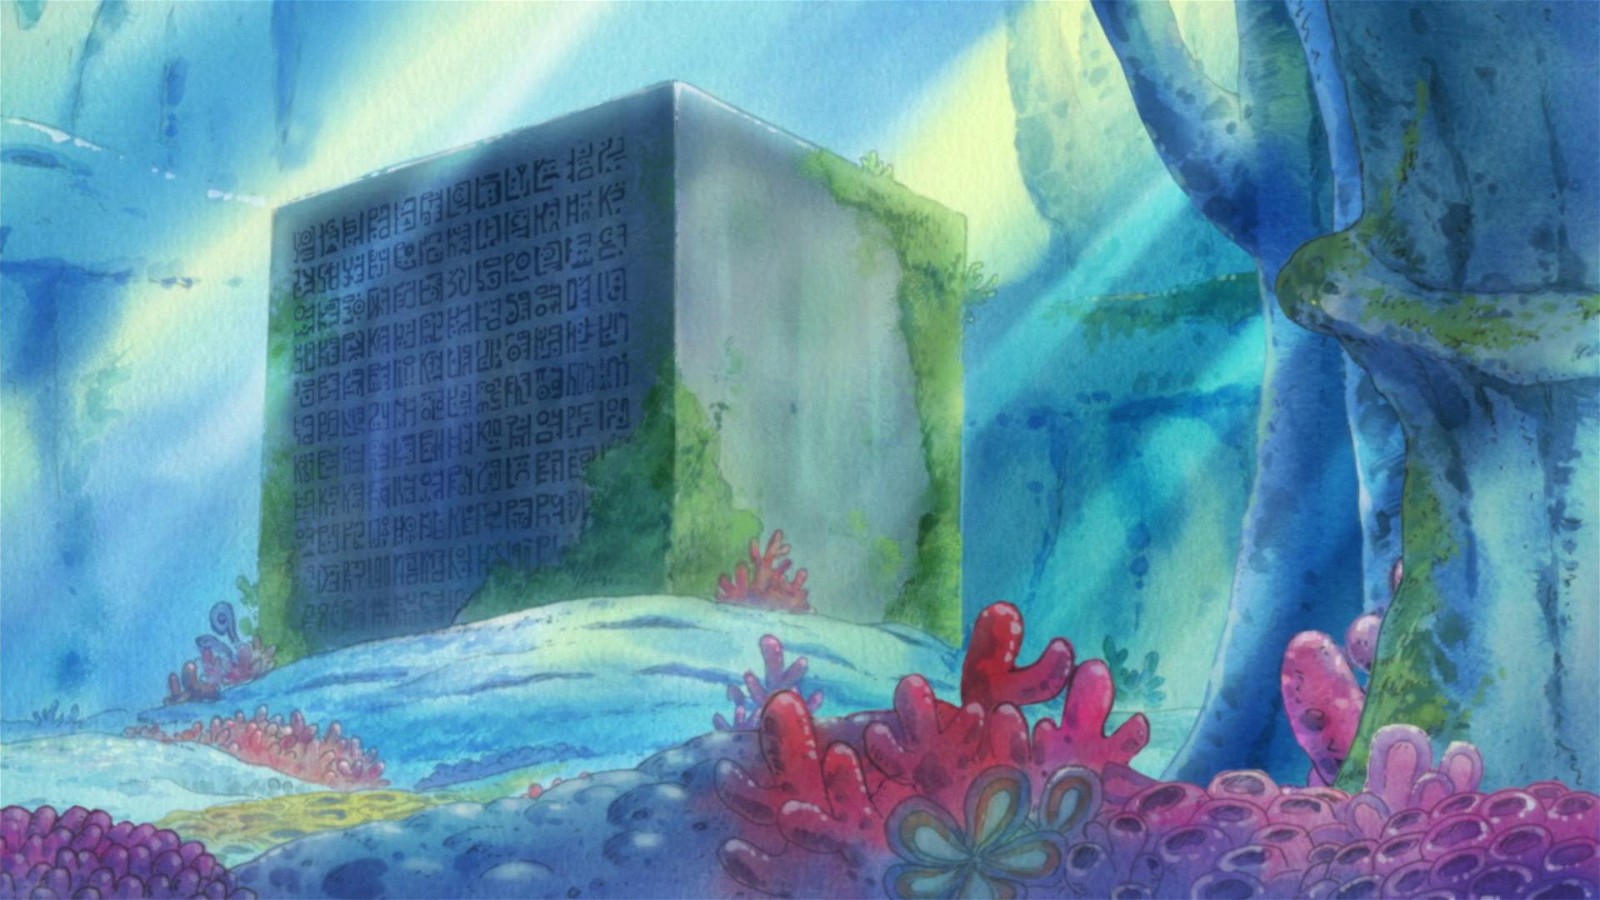 The Fish-Man Island Poneglyph | Toei Animation